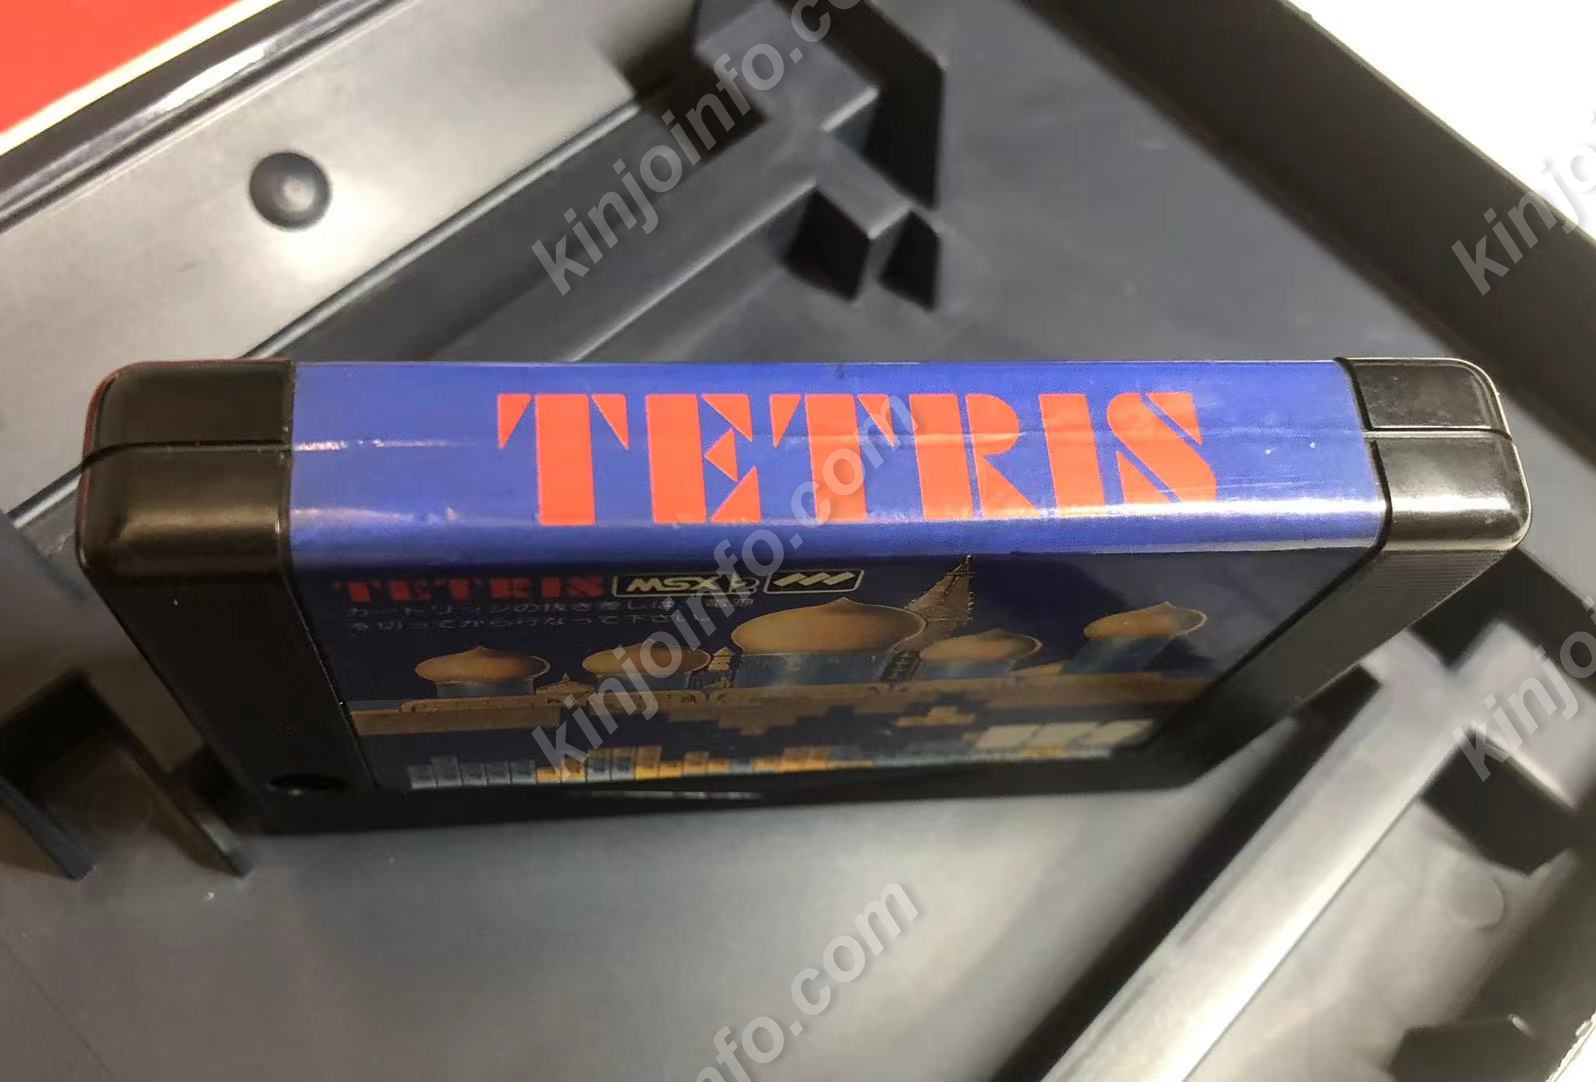 TETRISテトリス MSX2 カートリッジROMソフト【中古・MSX版・日本版】 / kinjoinfo